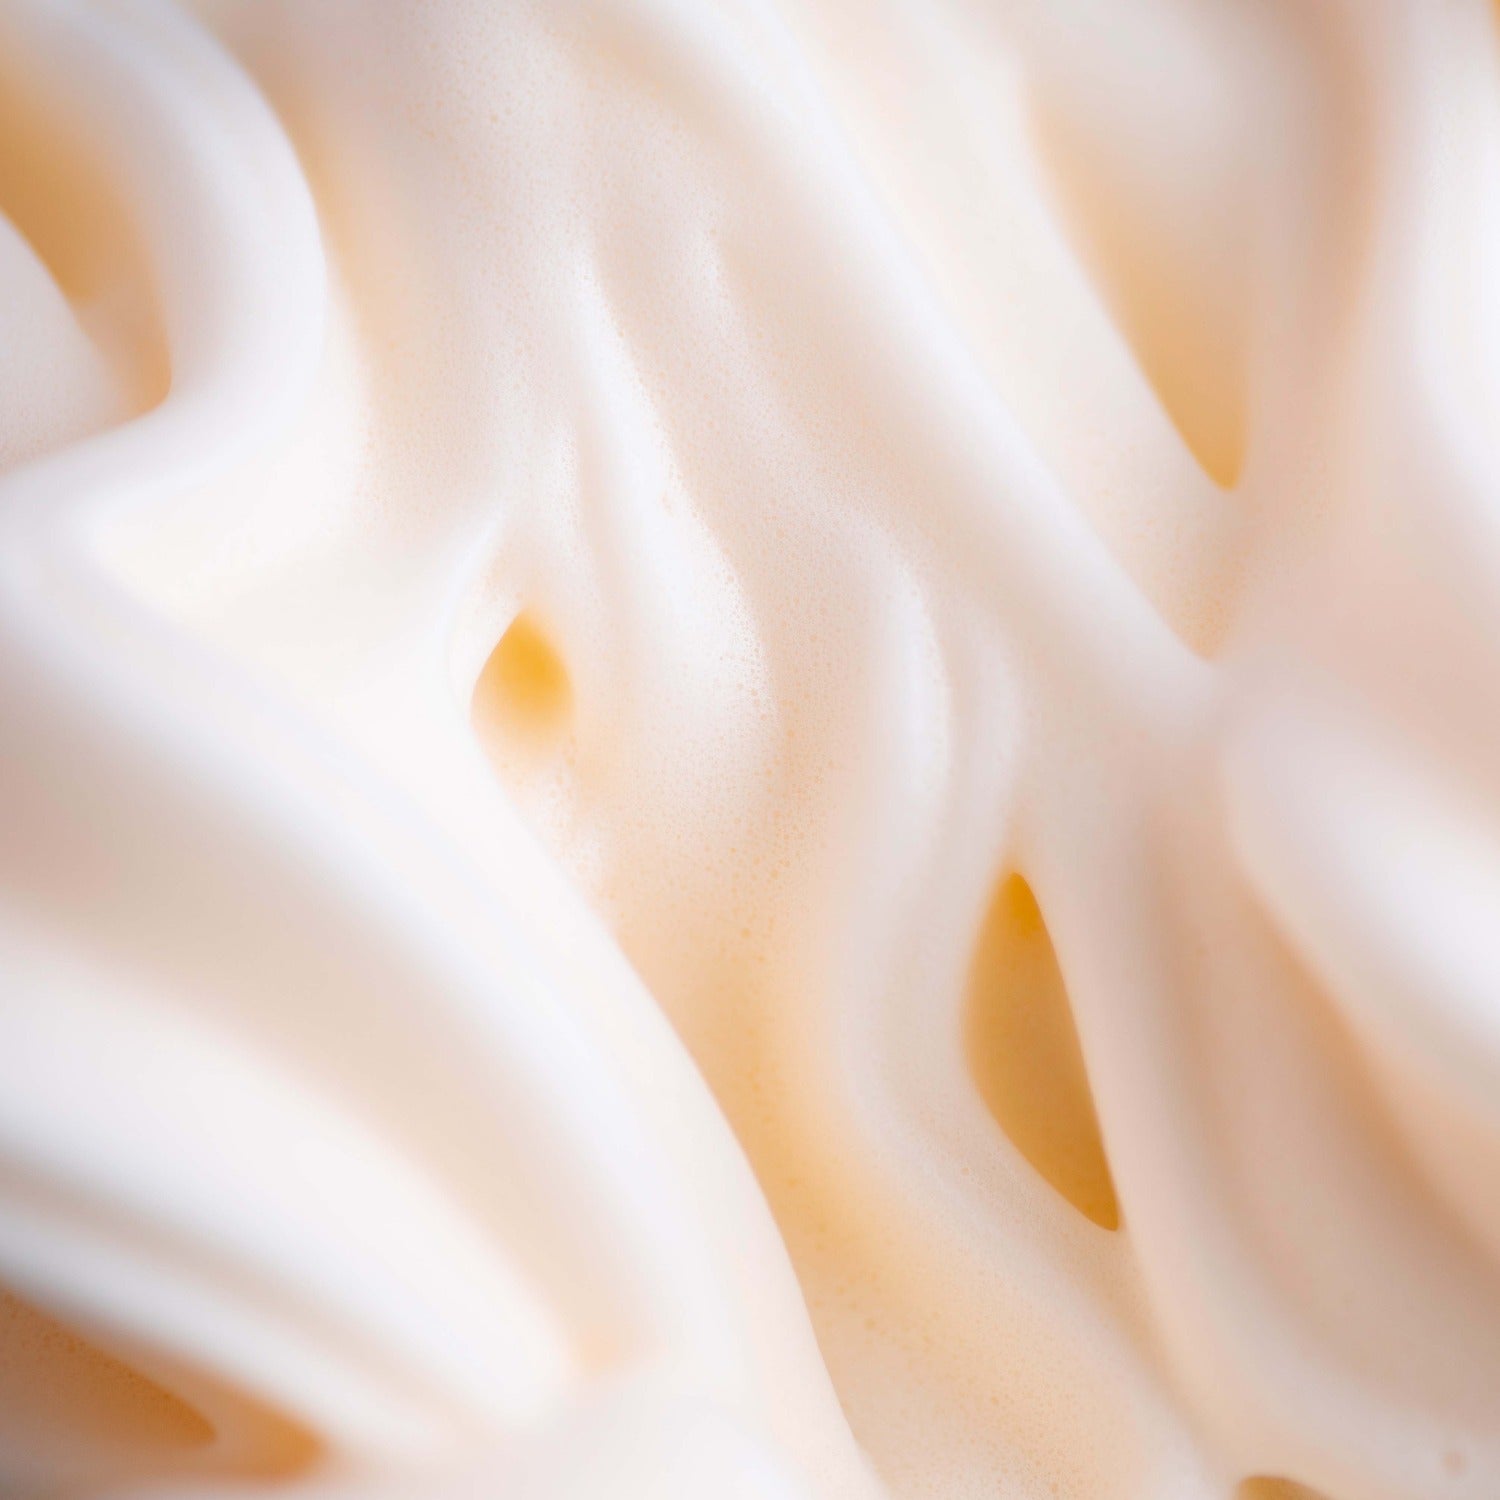 Close-up of Mecré moisturizing body wash with peach scent, presenting creamy, light orange foam.